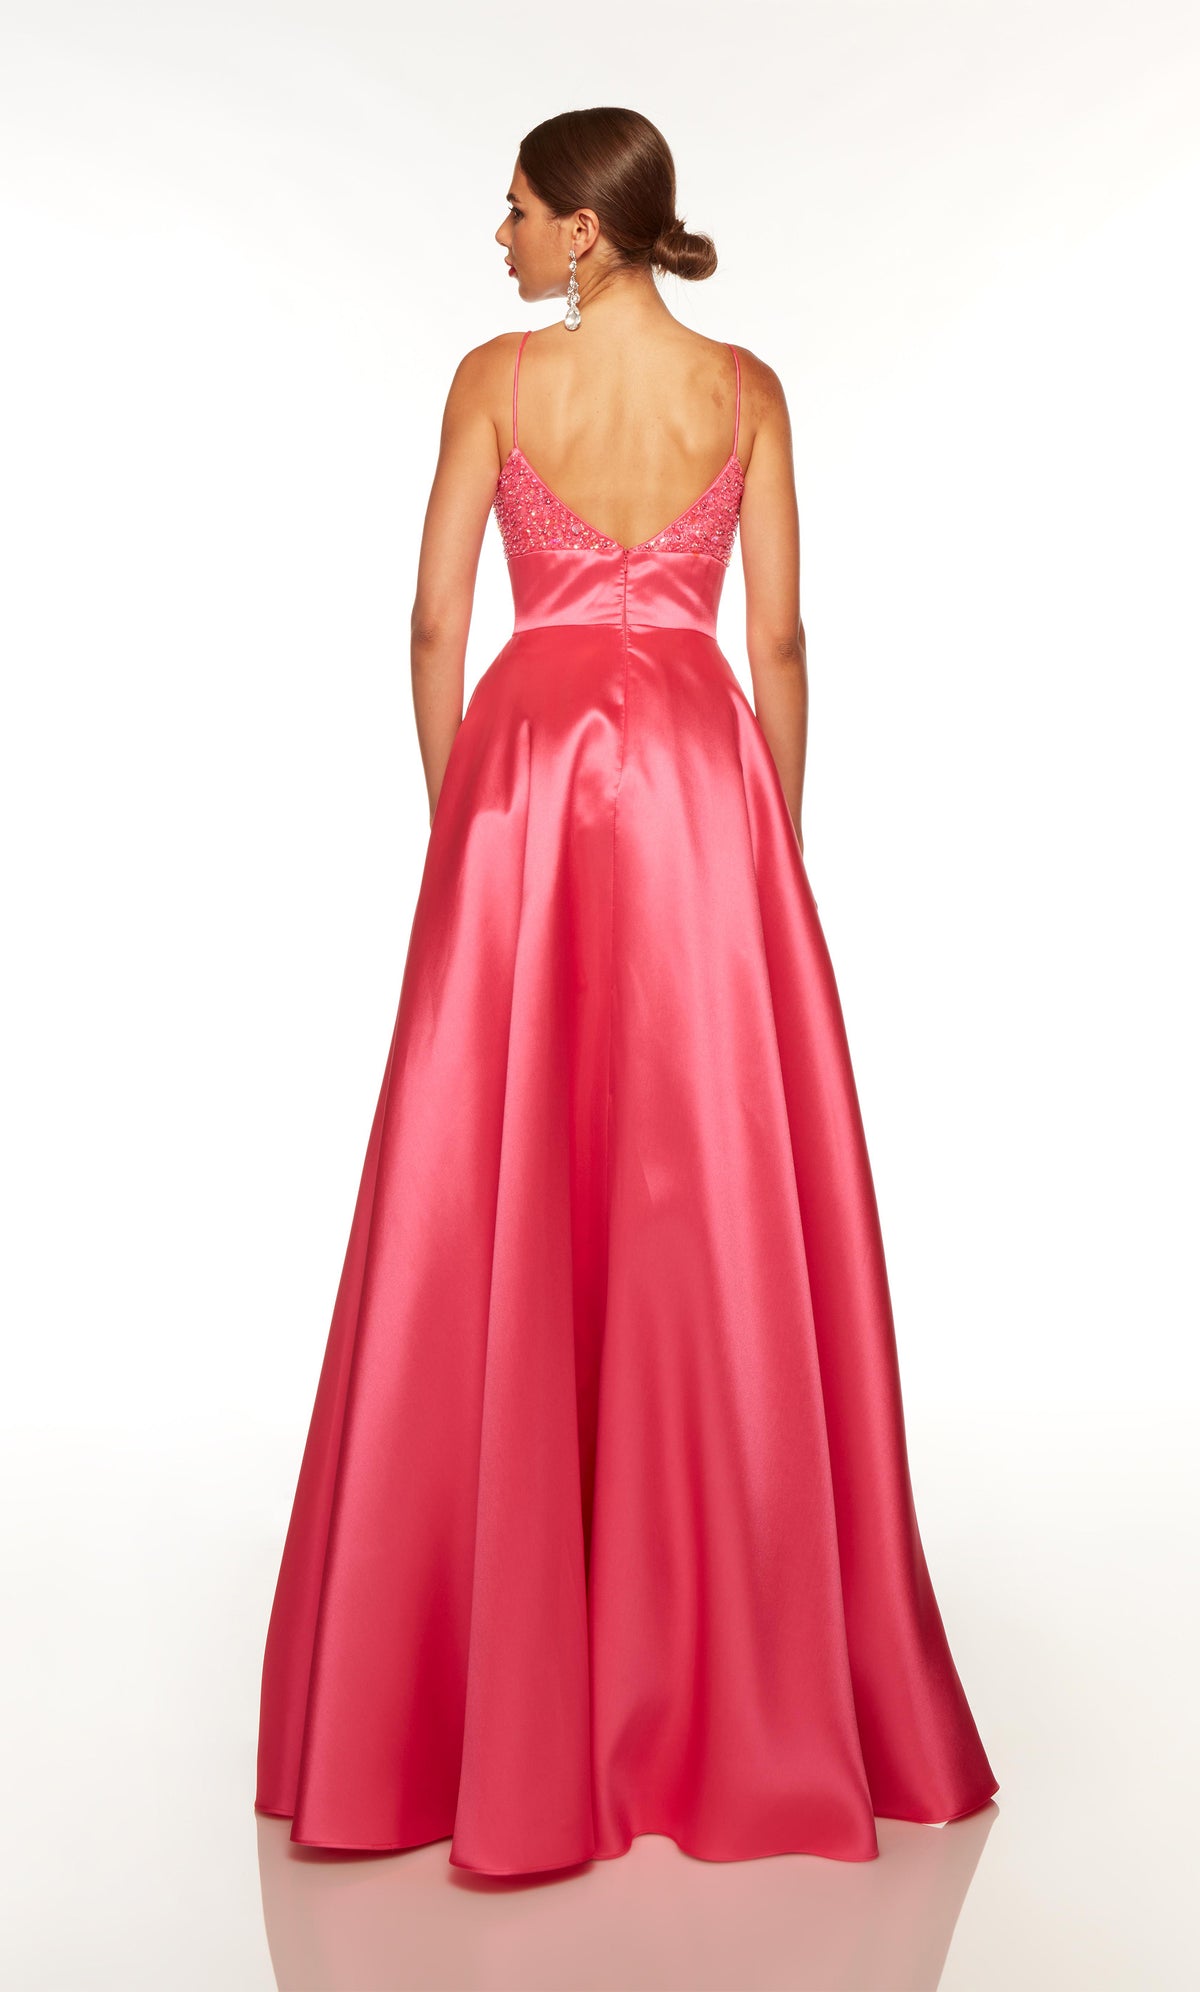 Floor length, hot pink formal dress with a V shaped back.